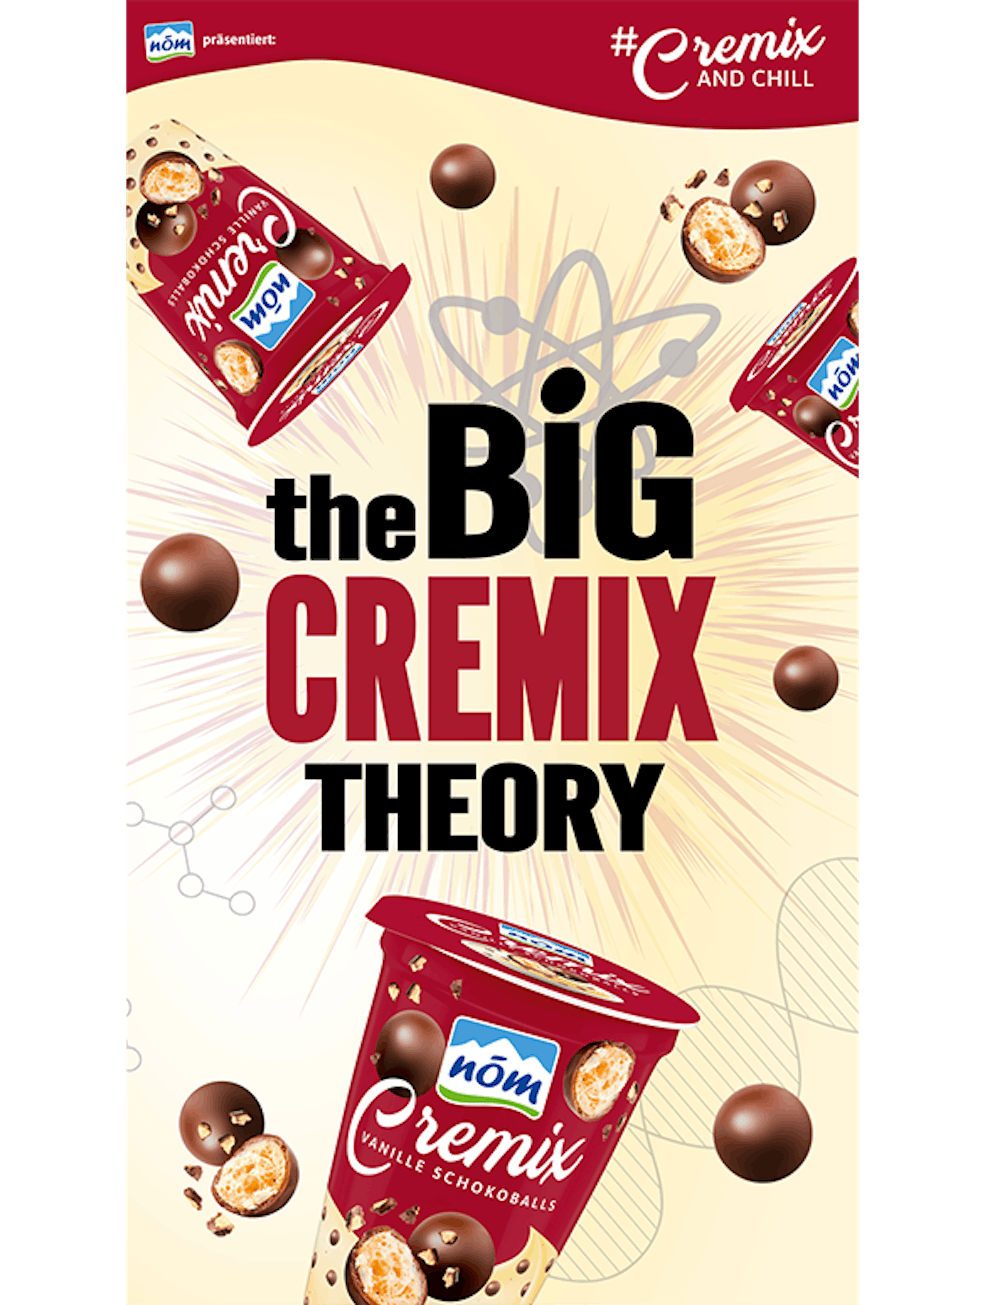 The big Cremix theory